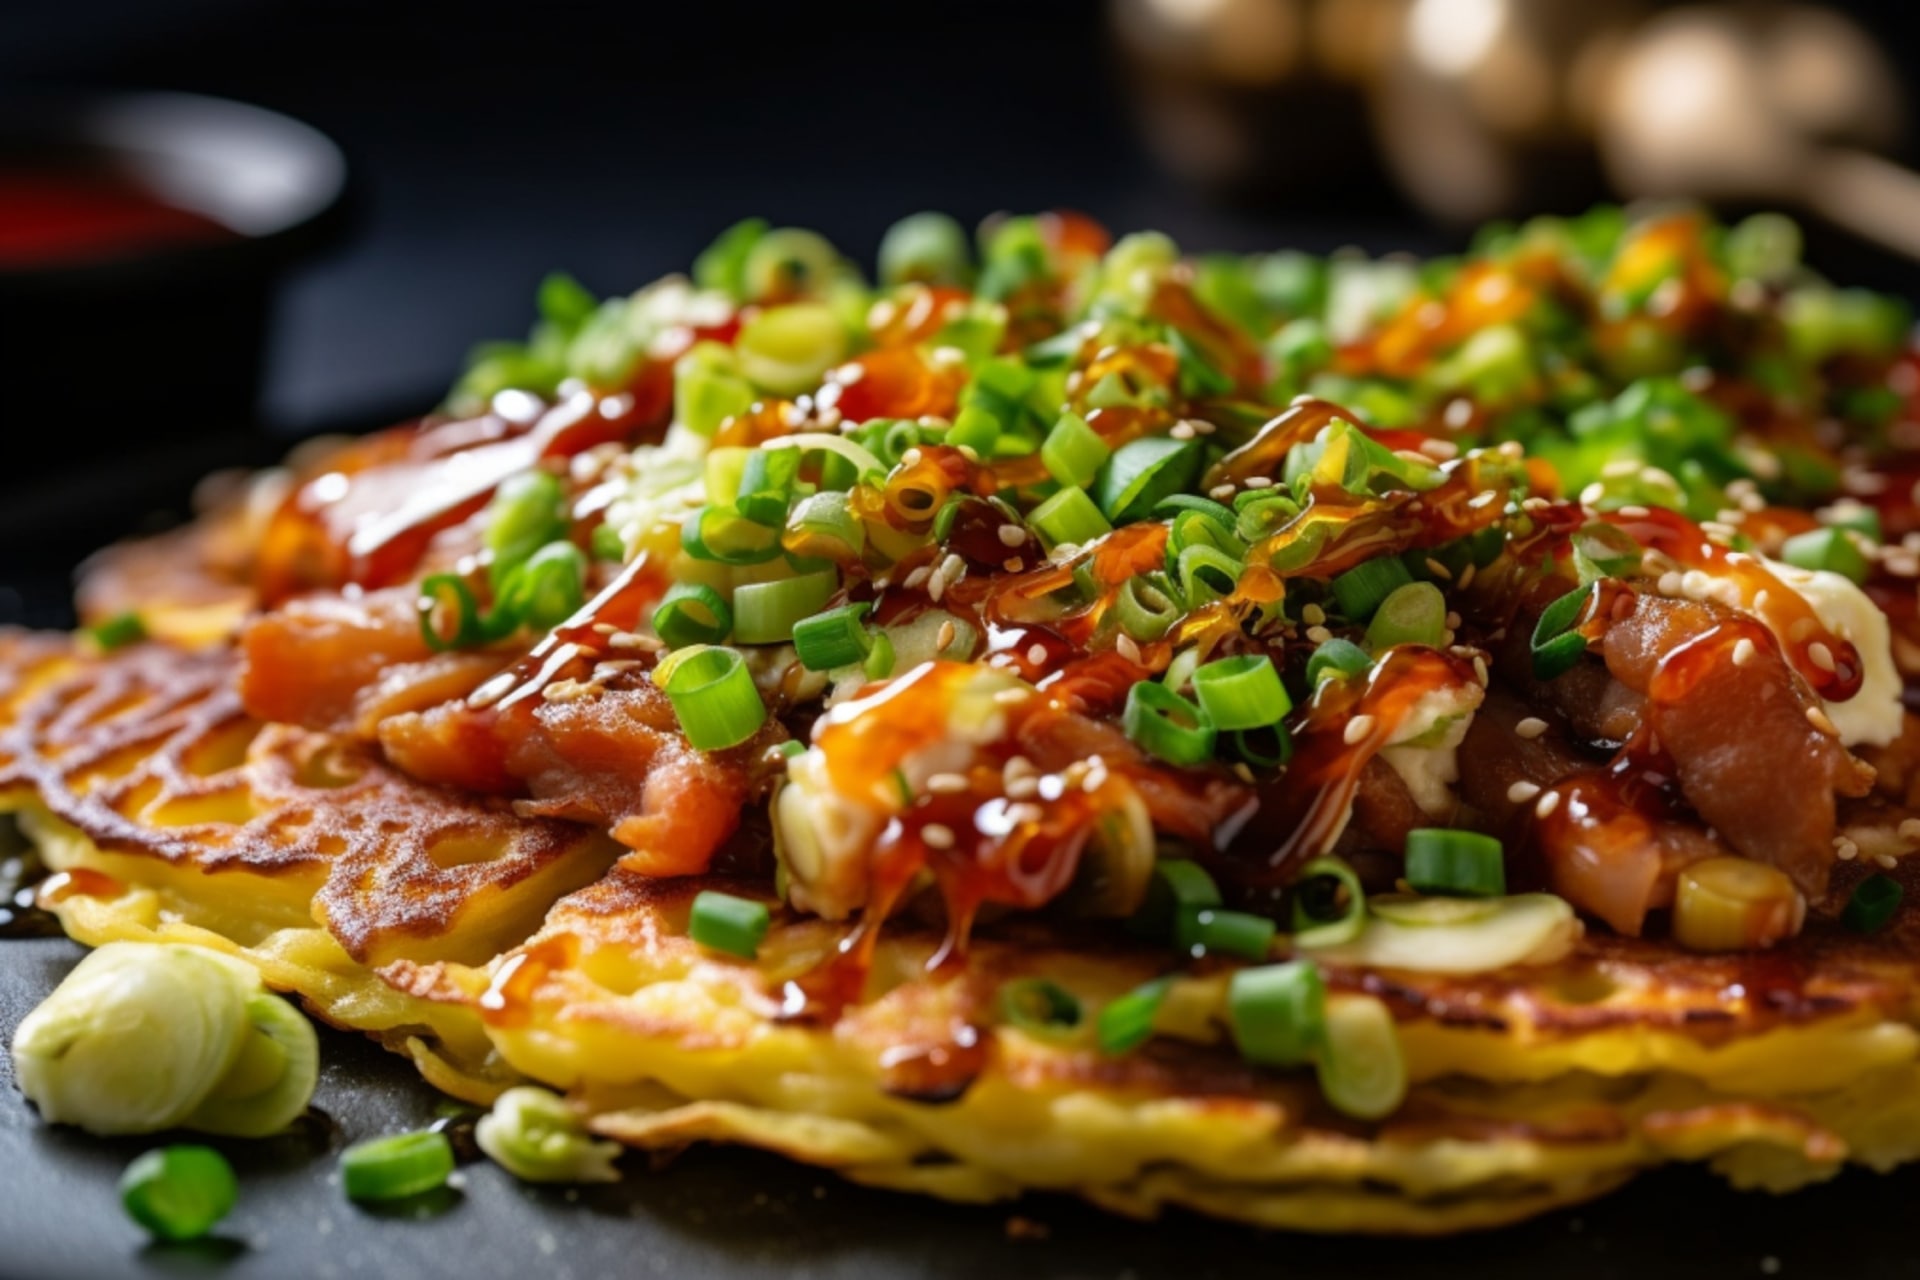 Osaka's Food: Okonomiyaki